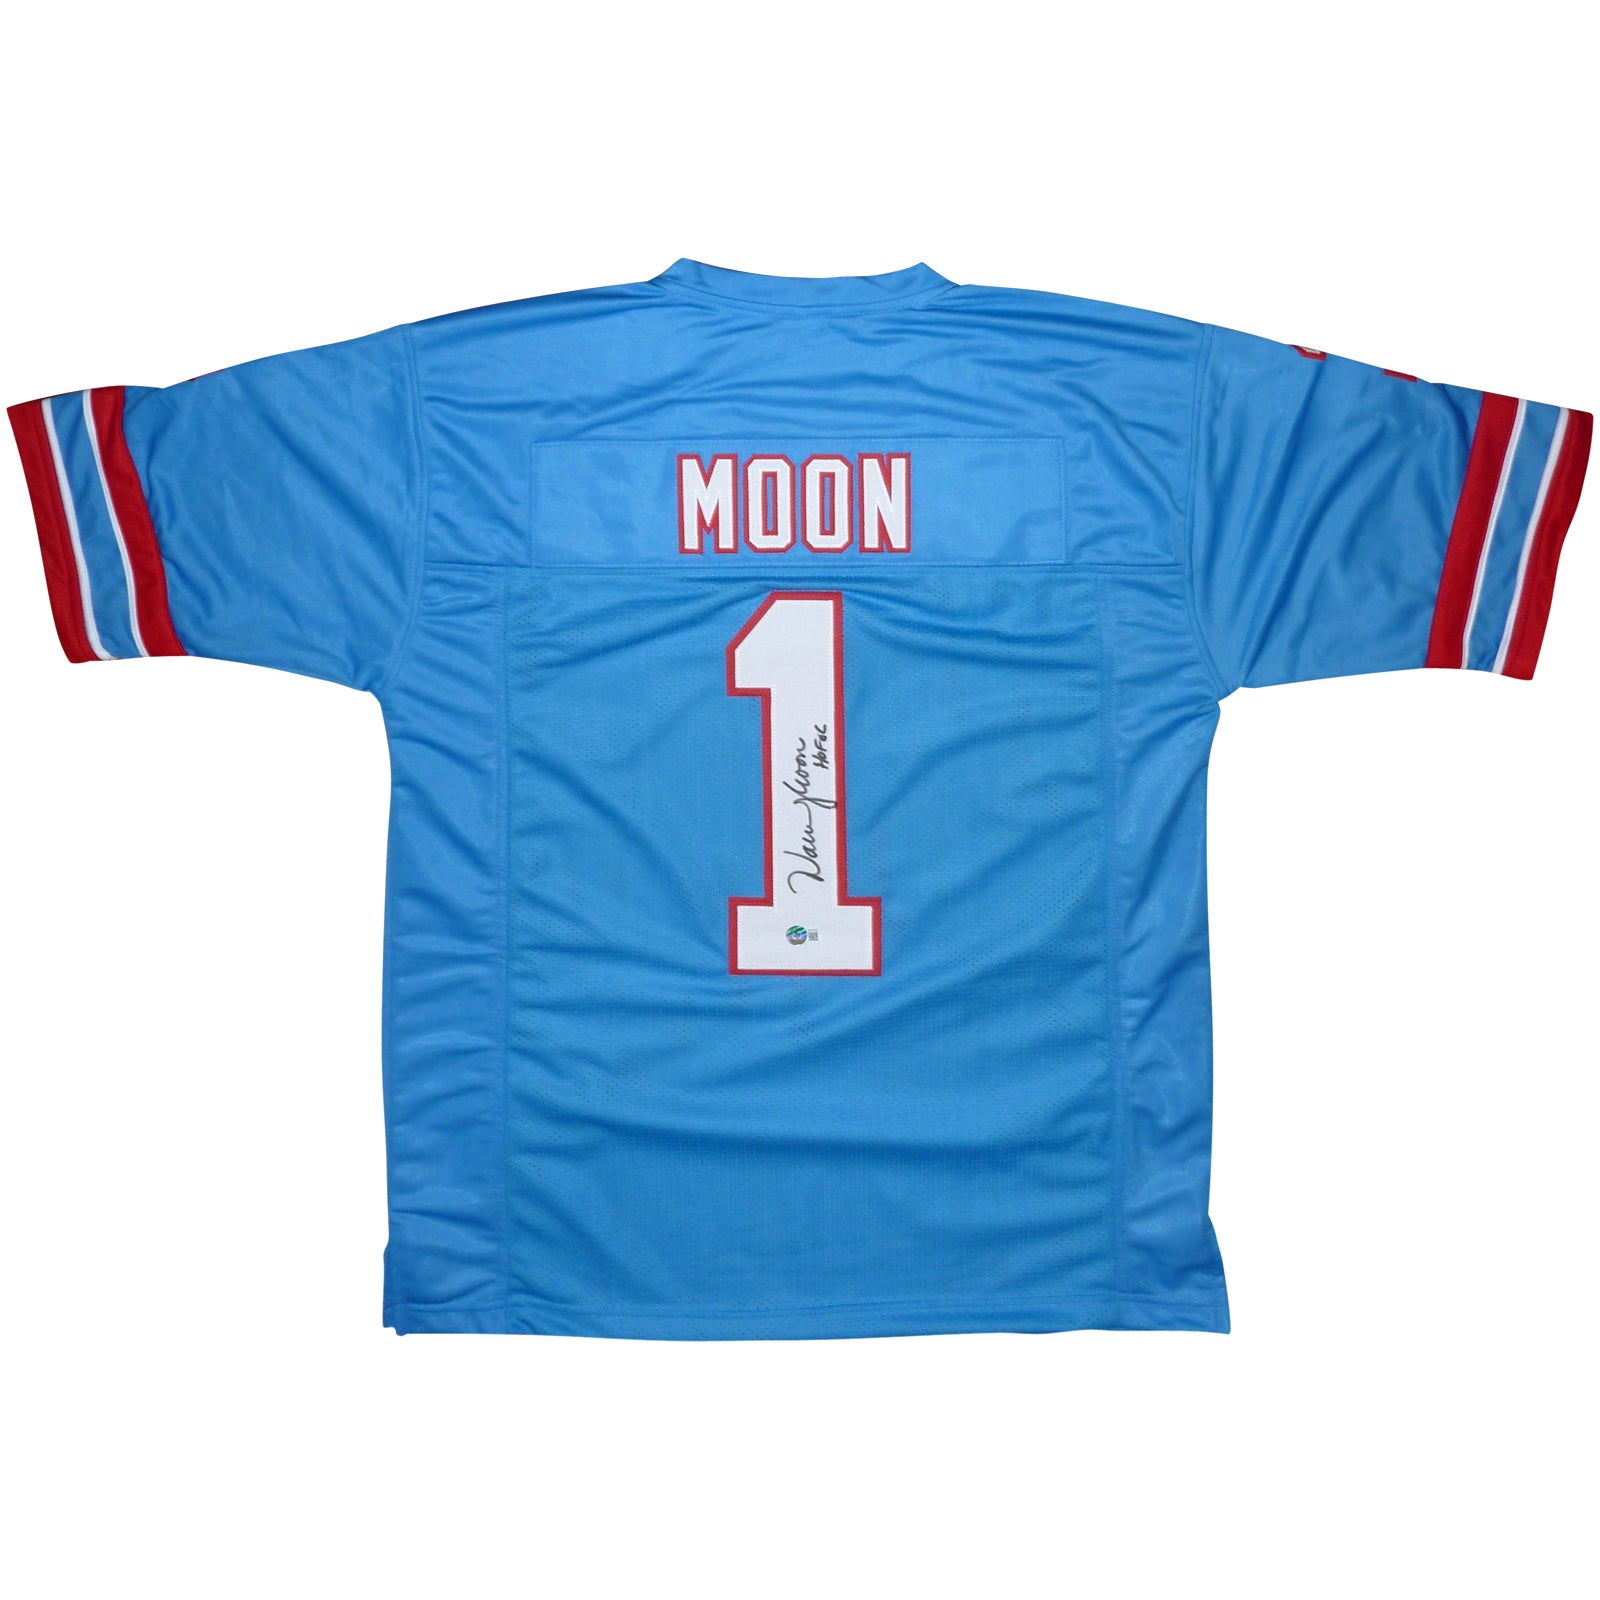 Warren Moon Autographed Houston Oilers (Baby Blue #1) Jersey